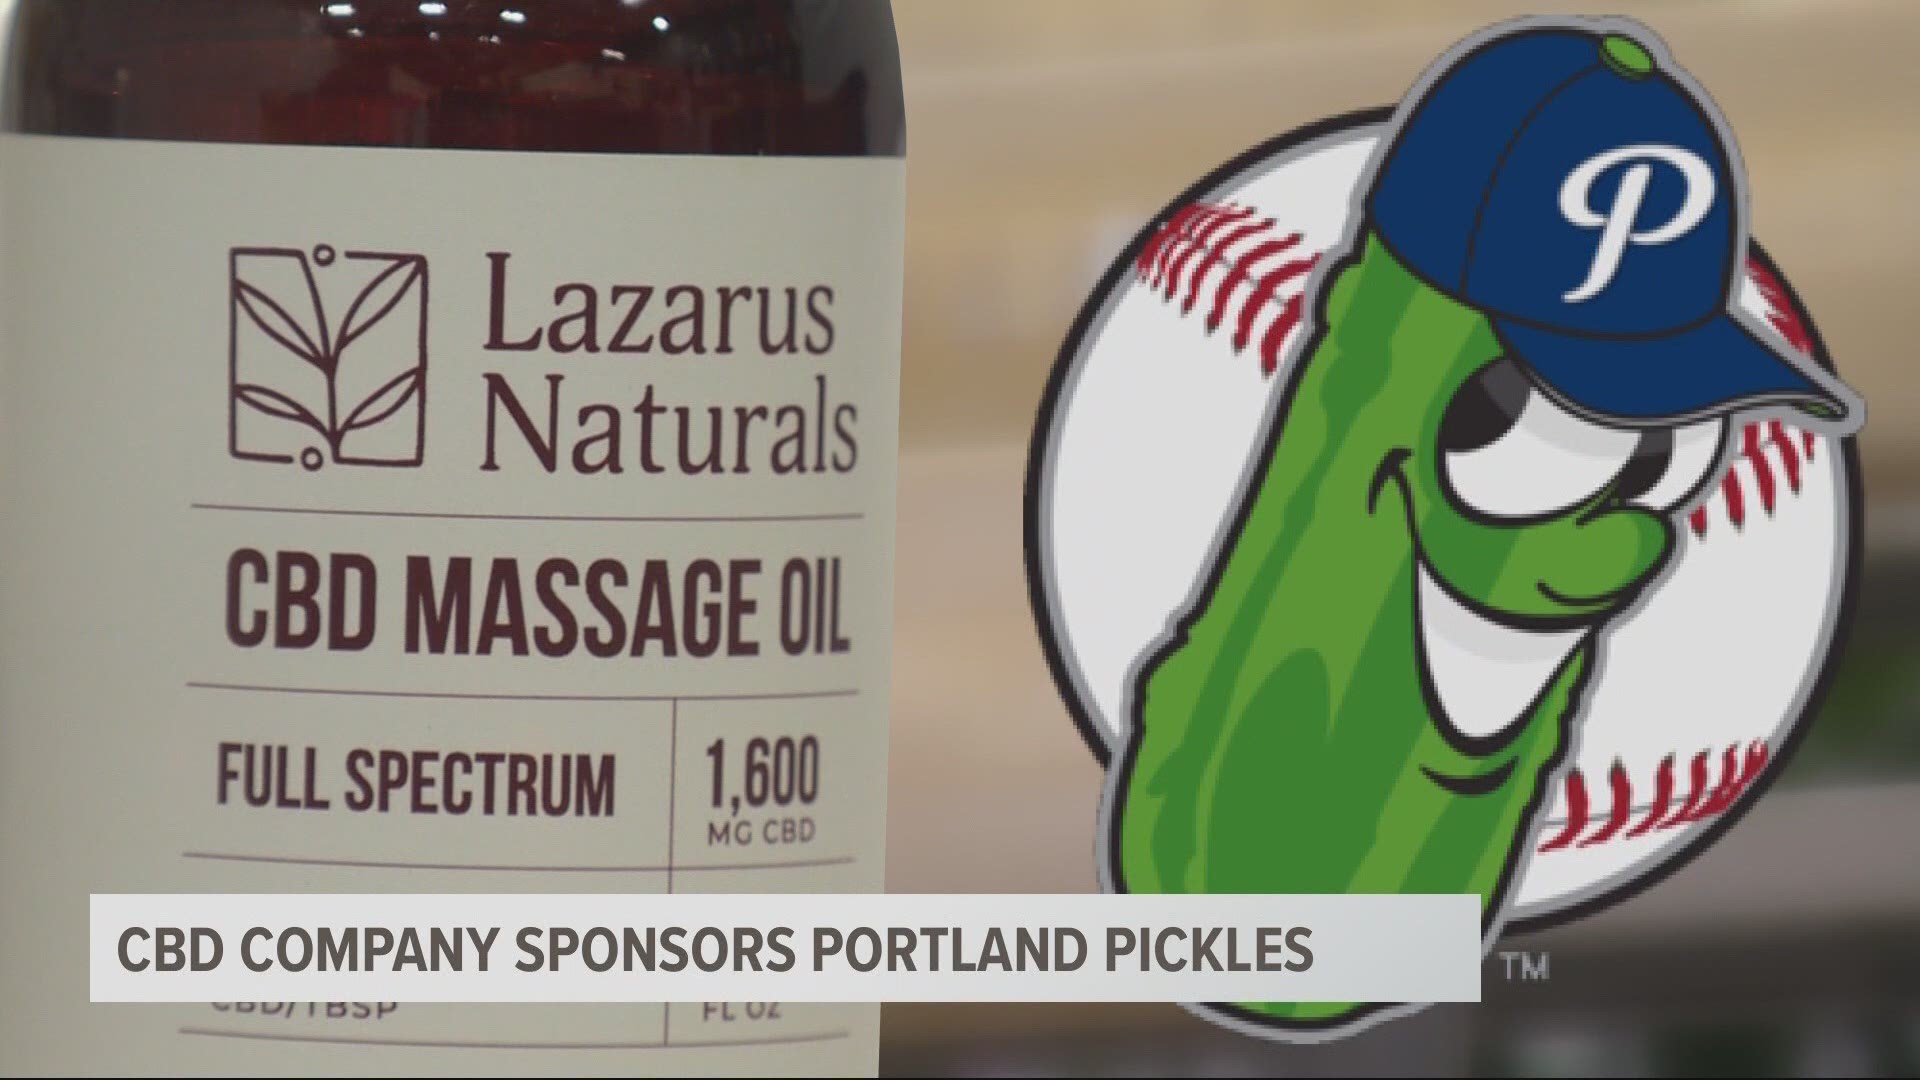 A CBD company is sponsoring the Portland Pickles.